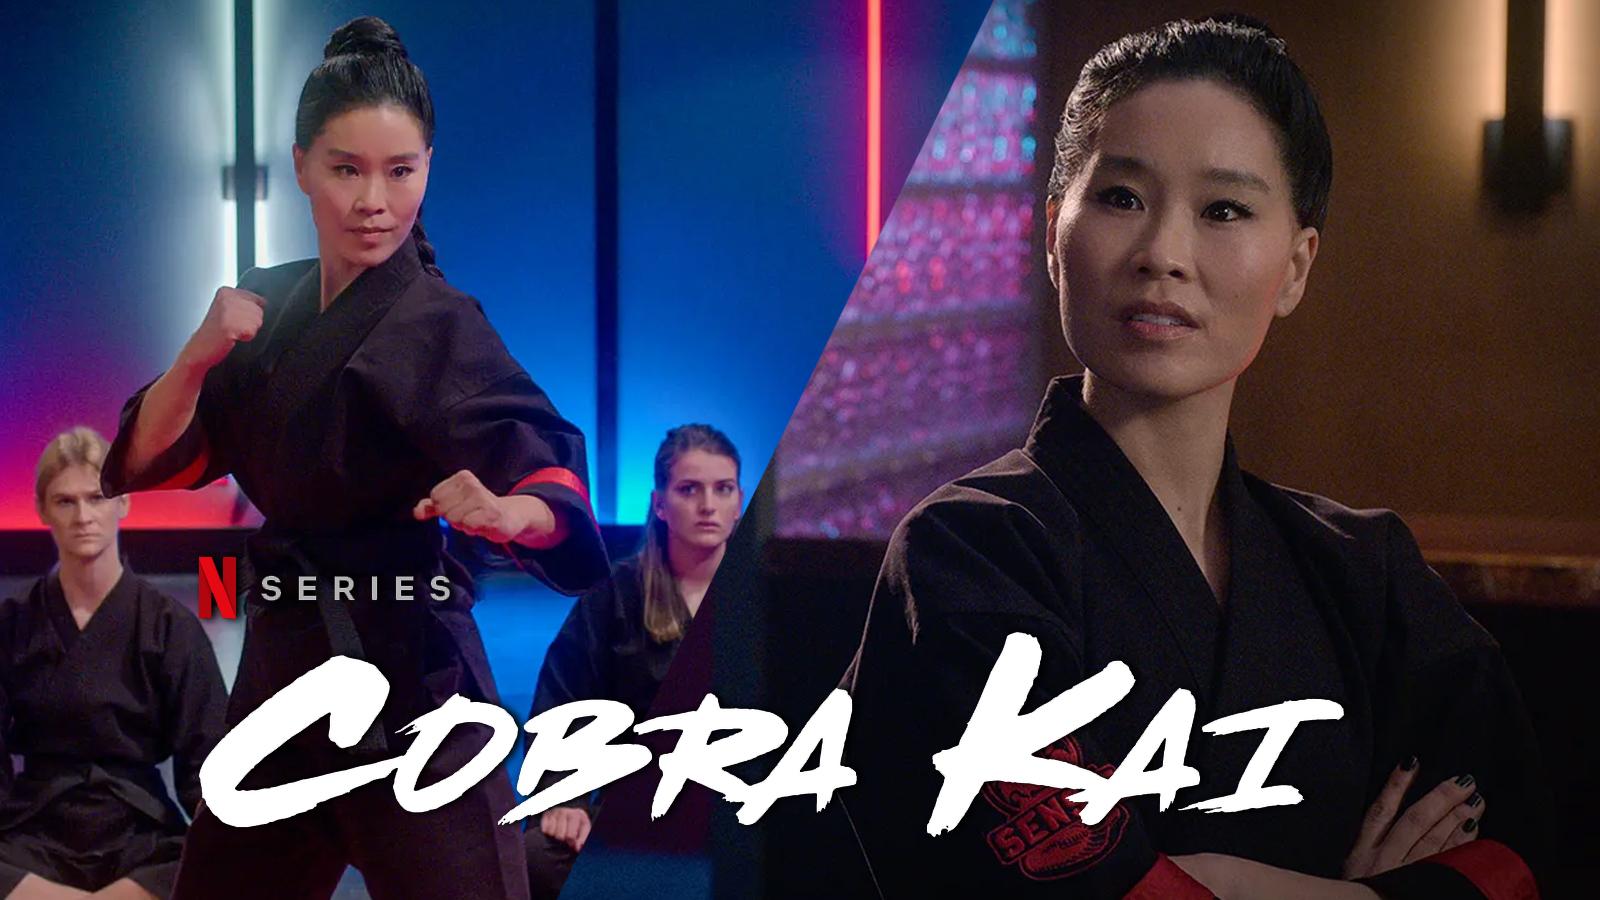 Cobra Kai' Season 5 Sets September Premiere Date